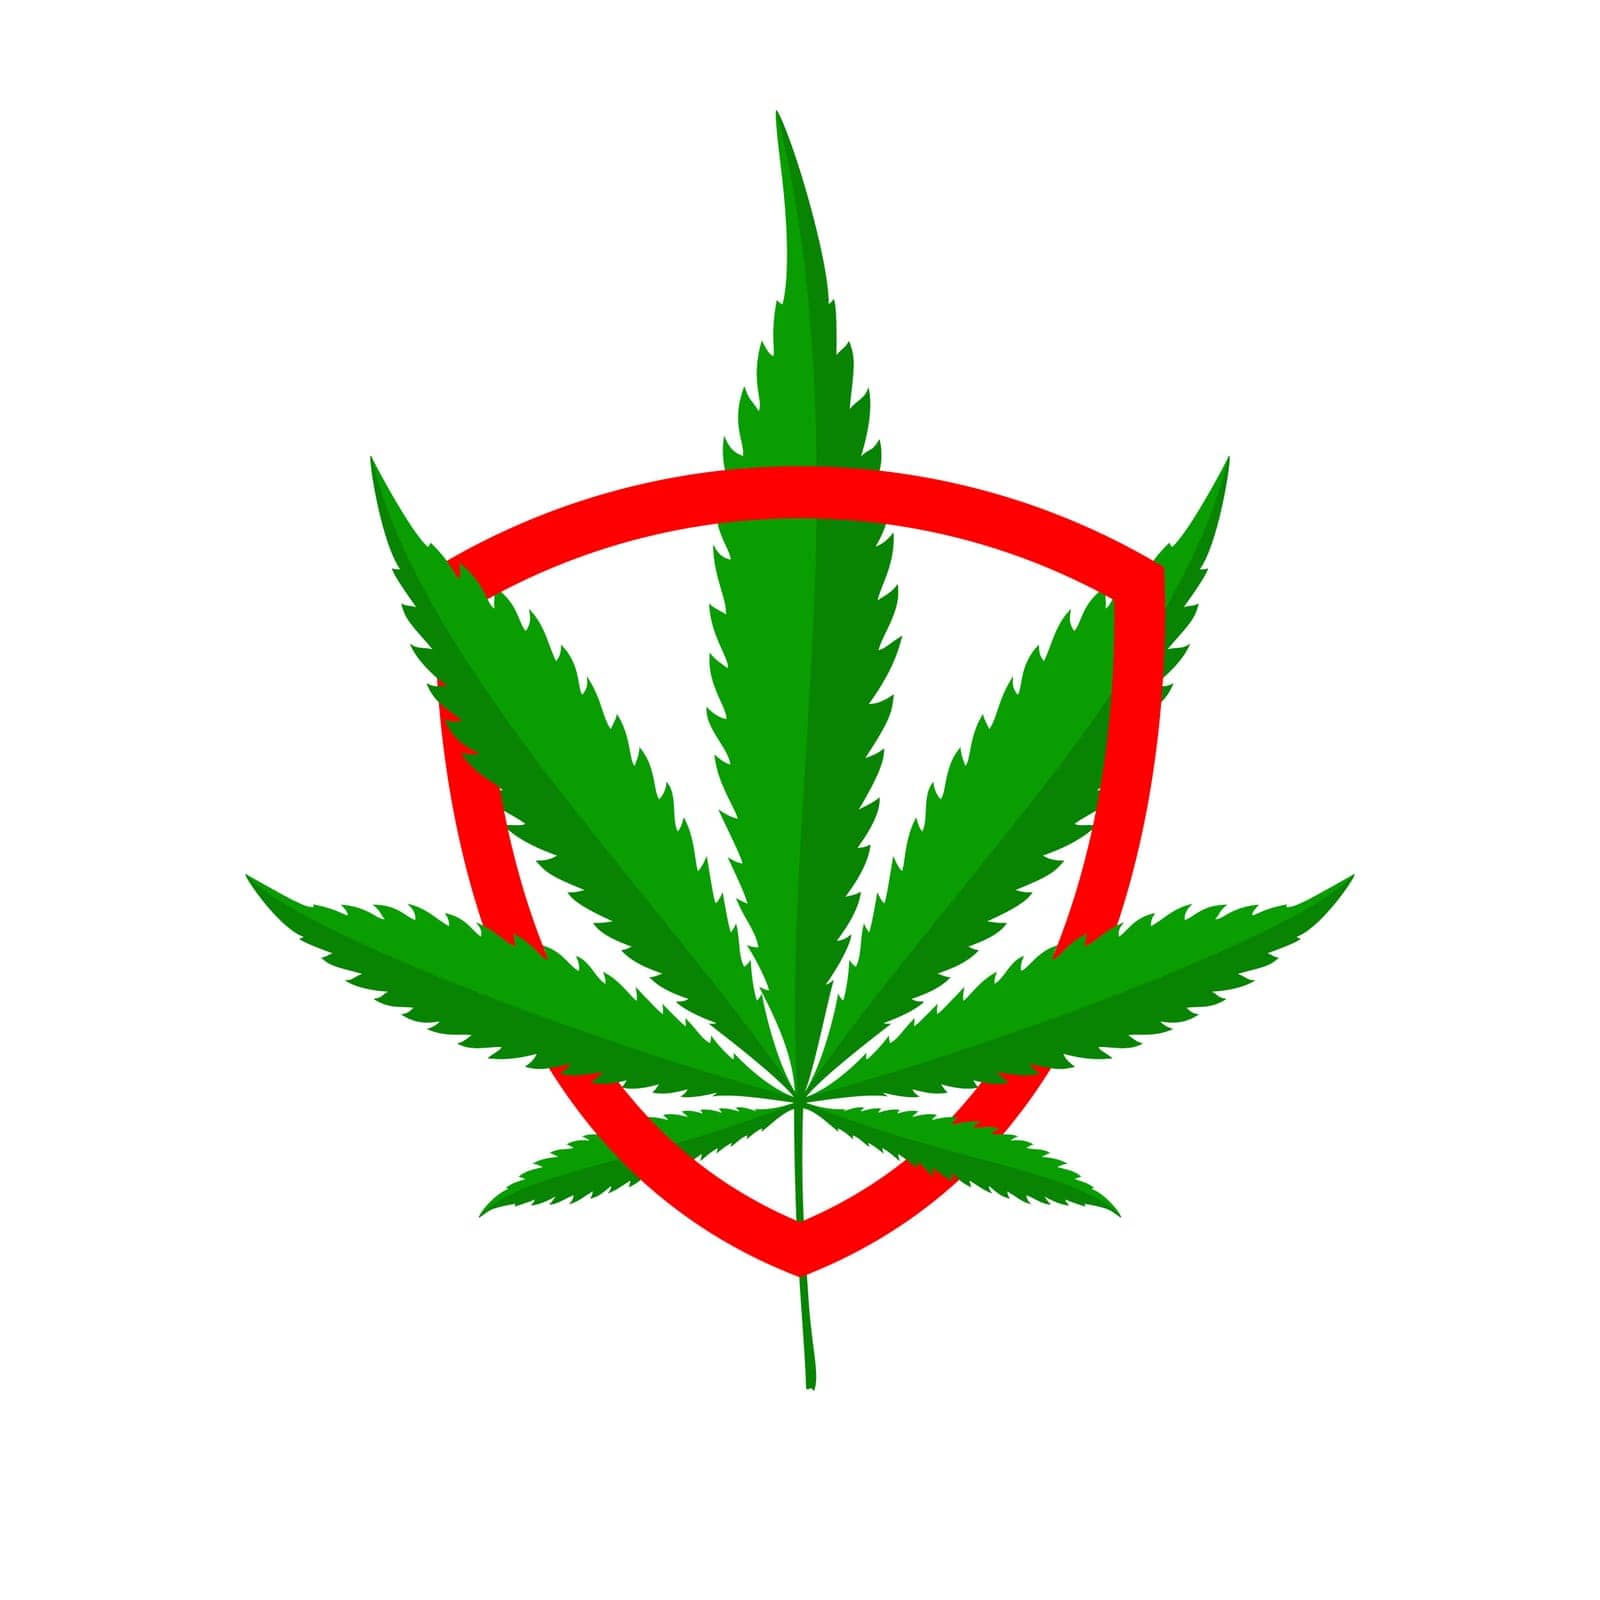 Shield with Cannabis or marijuana leaves. by Chekman